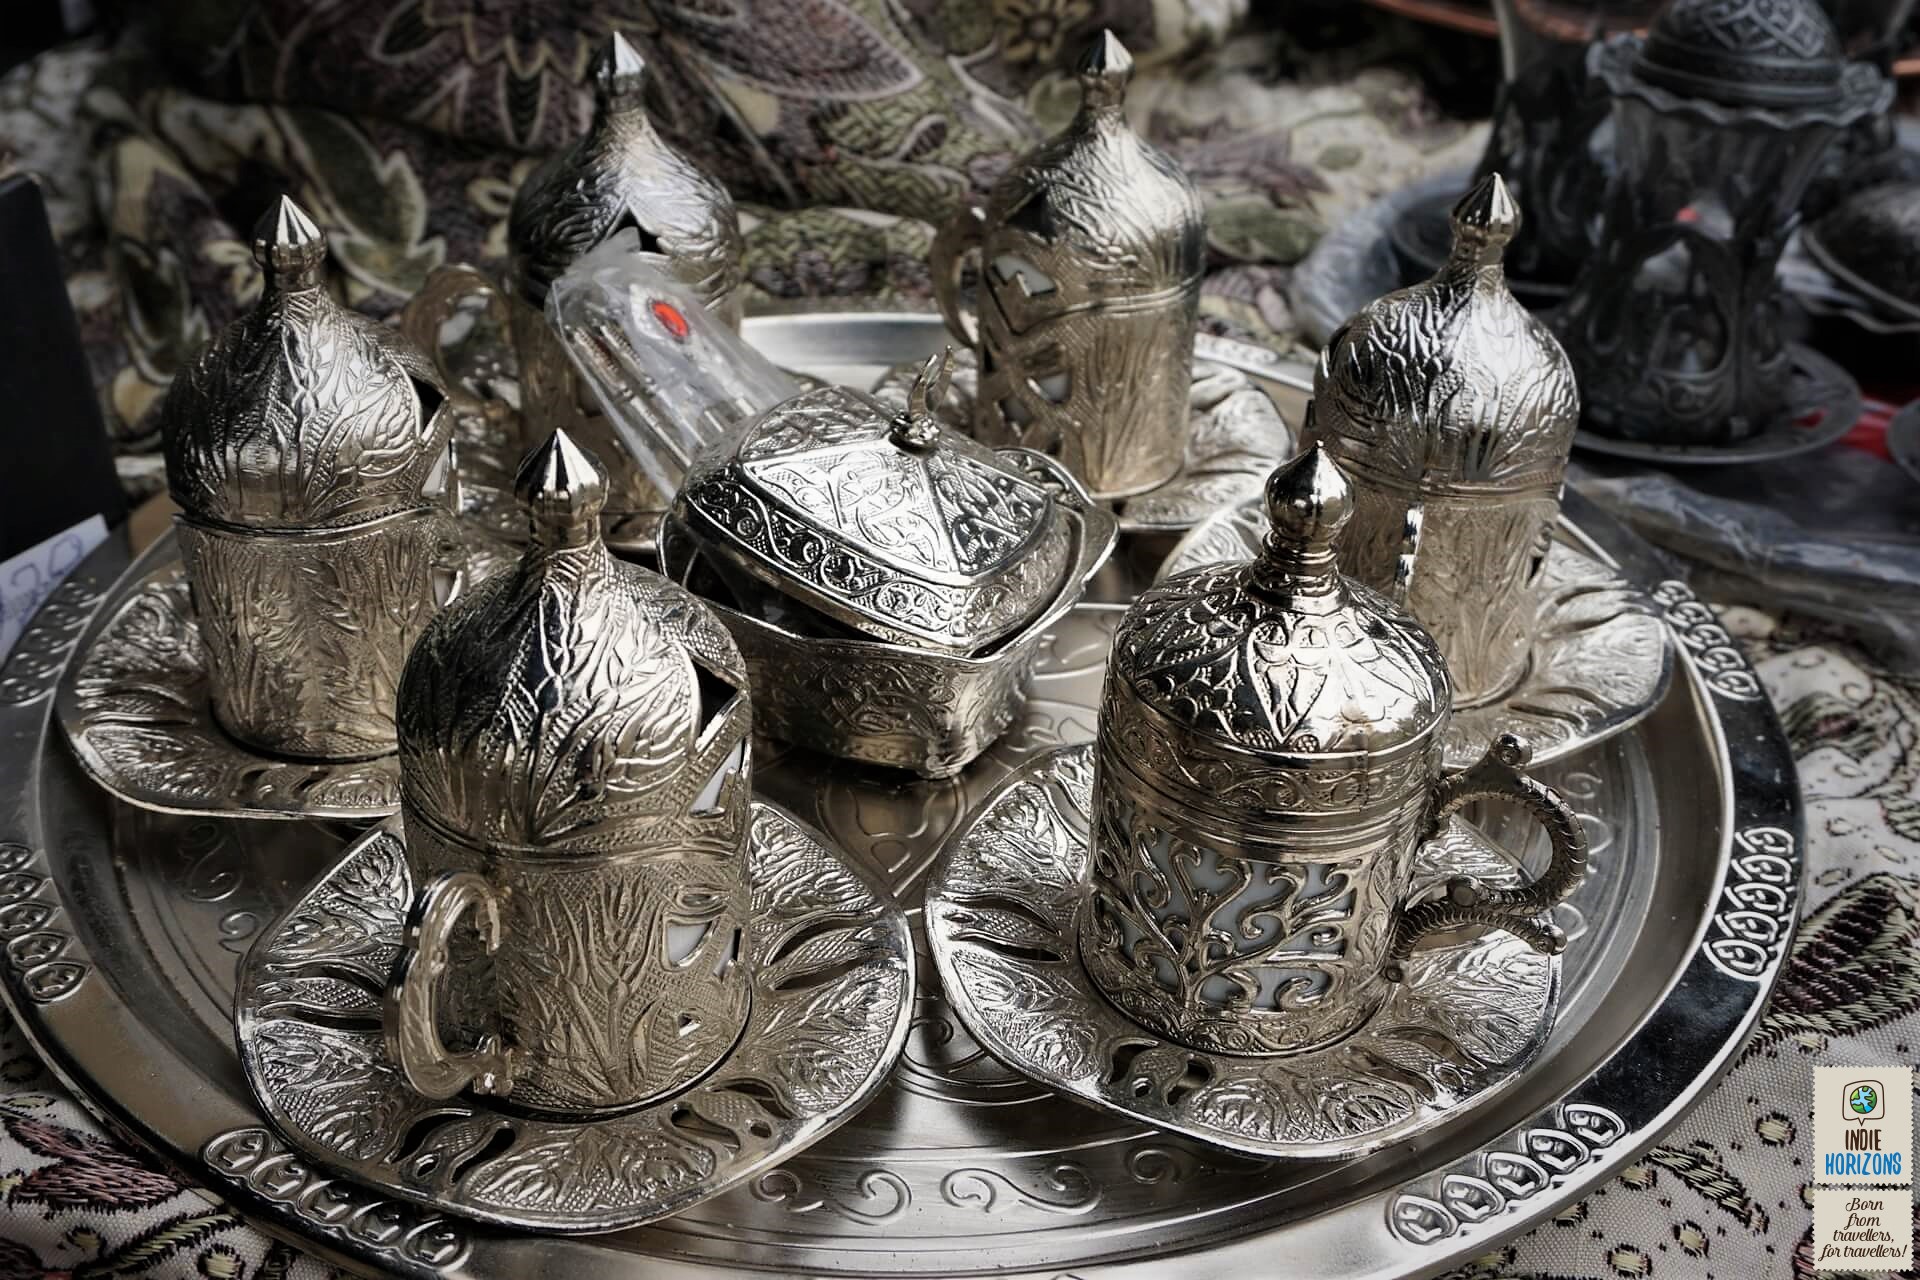 02. Azerbaijan, traditional tea cups at Icherisheher, Baku